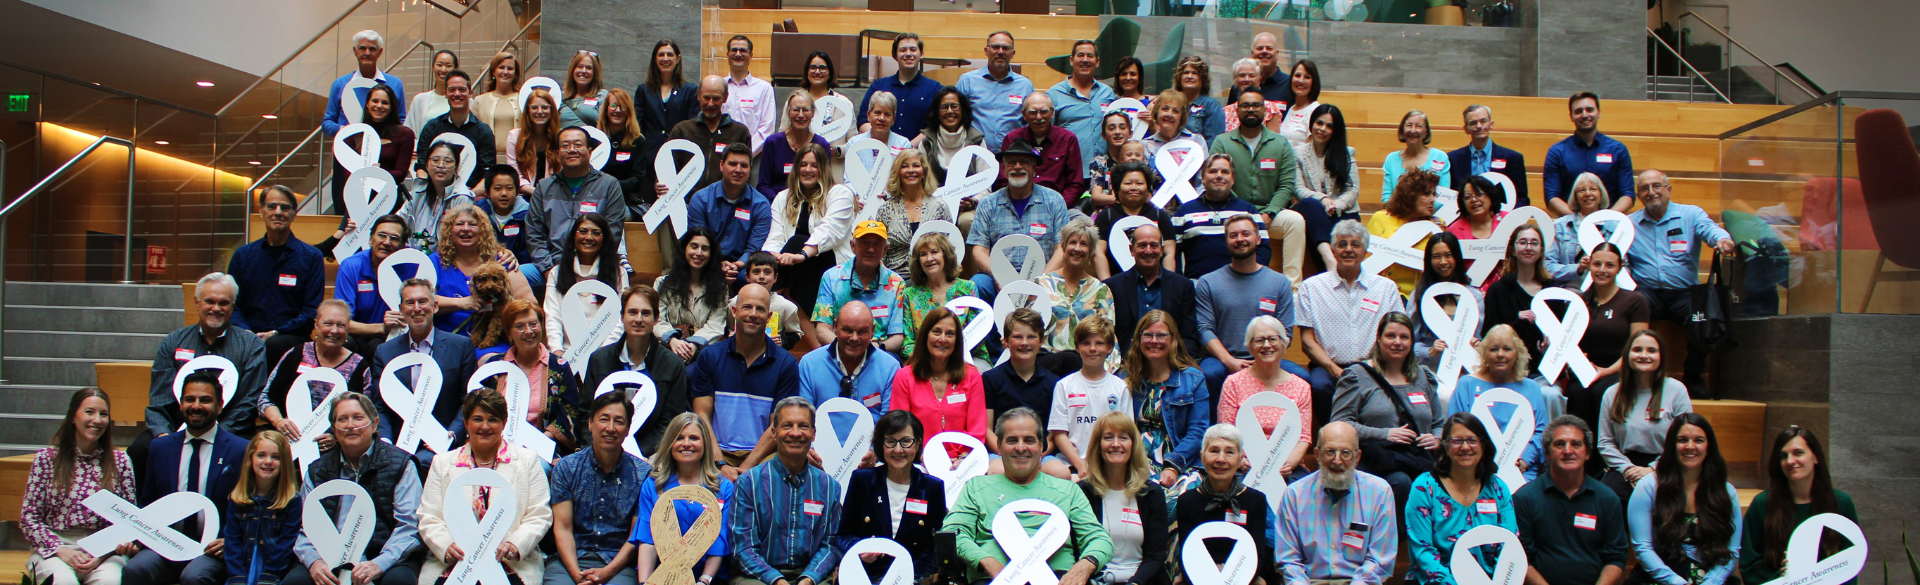 5+ Years Lung Cancer Survivorship Celebration | University of Colorado Cancer Center